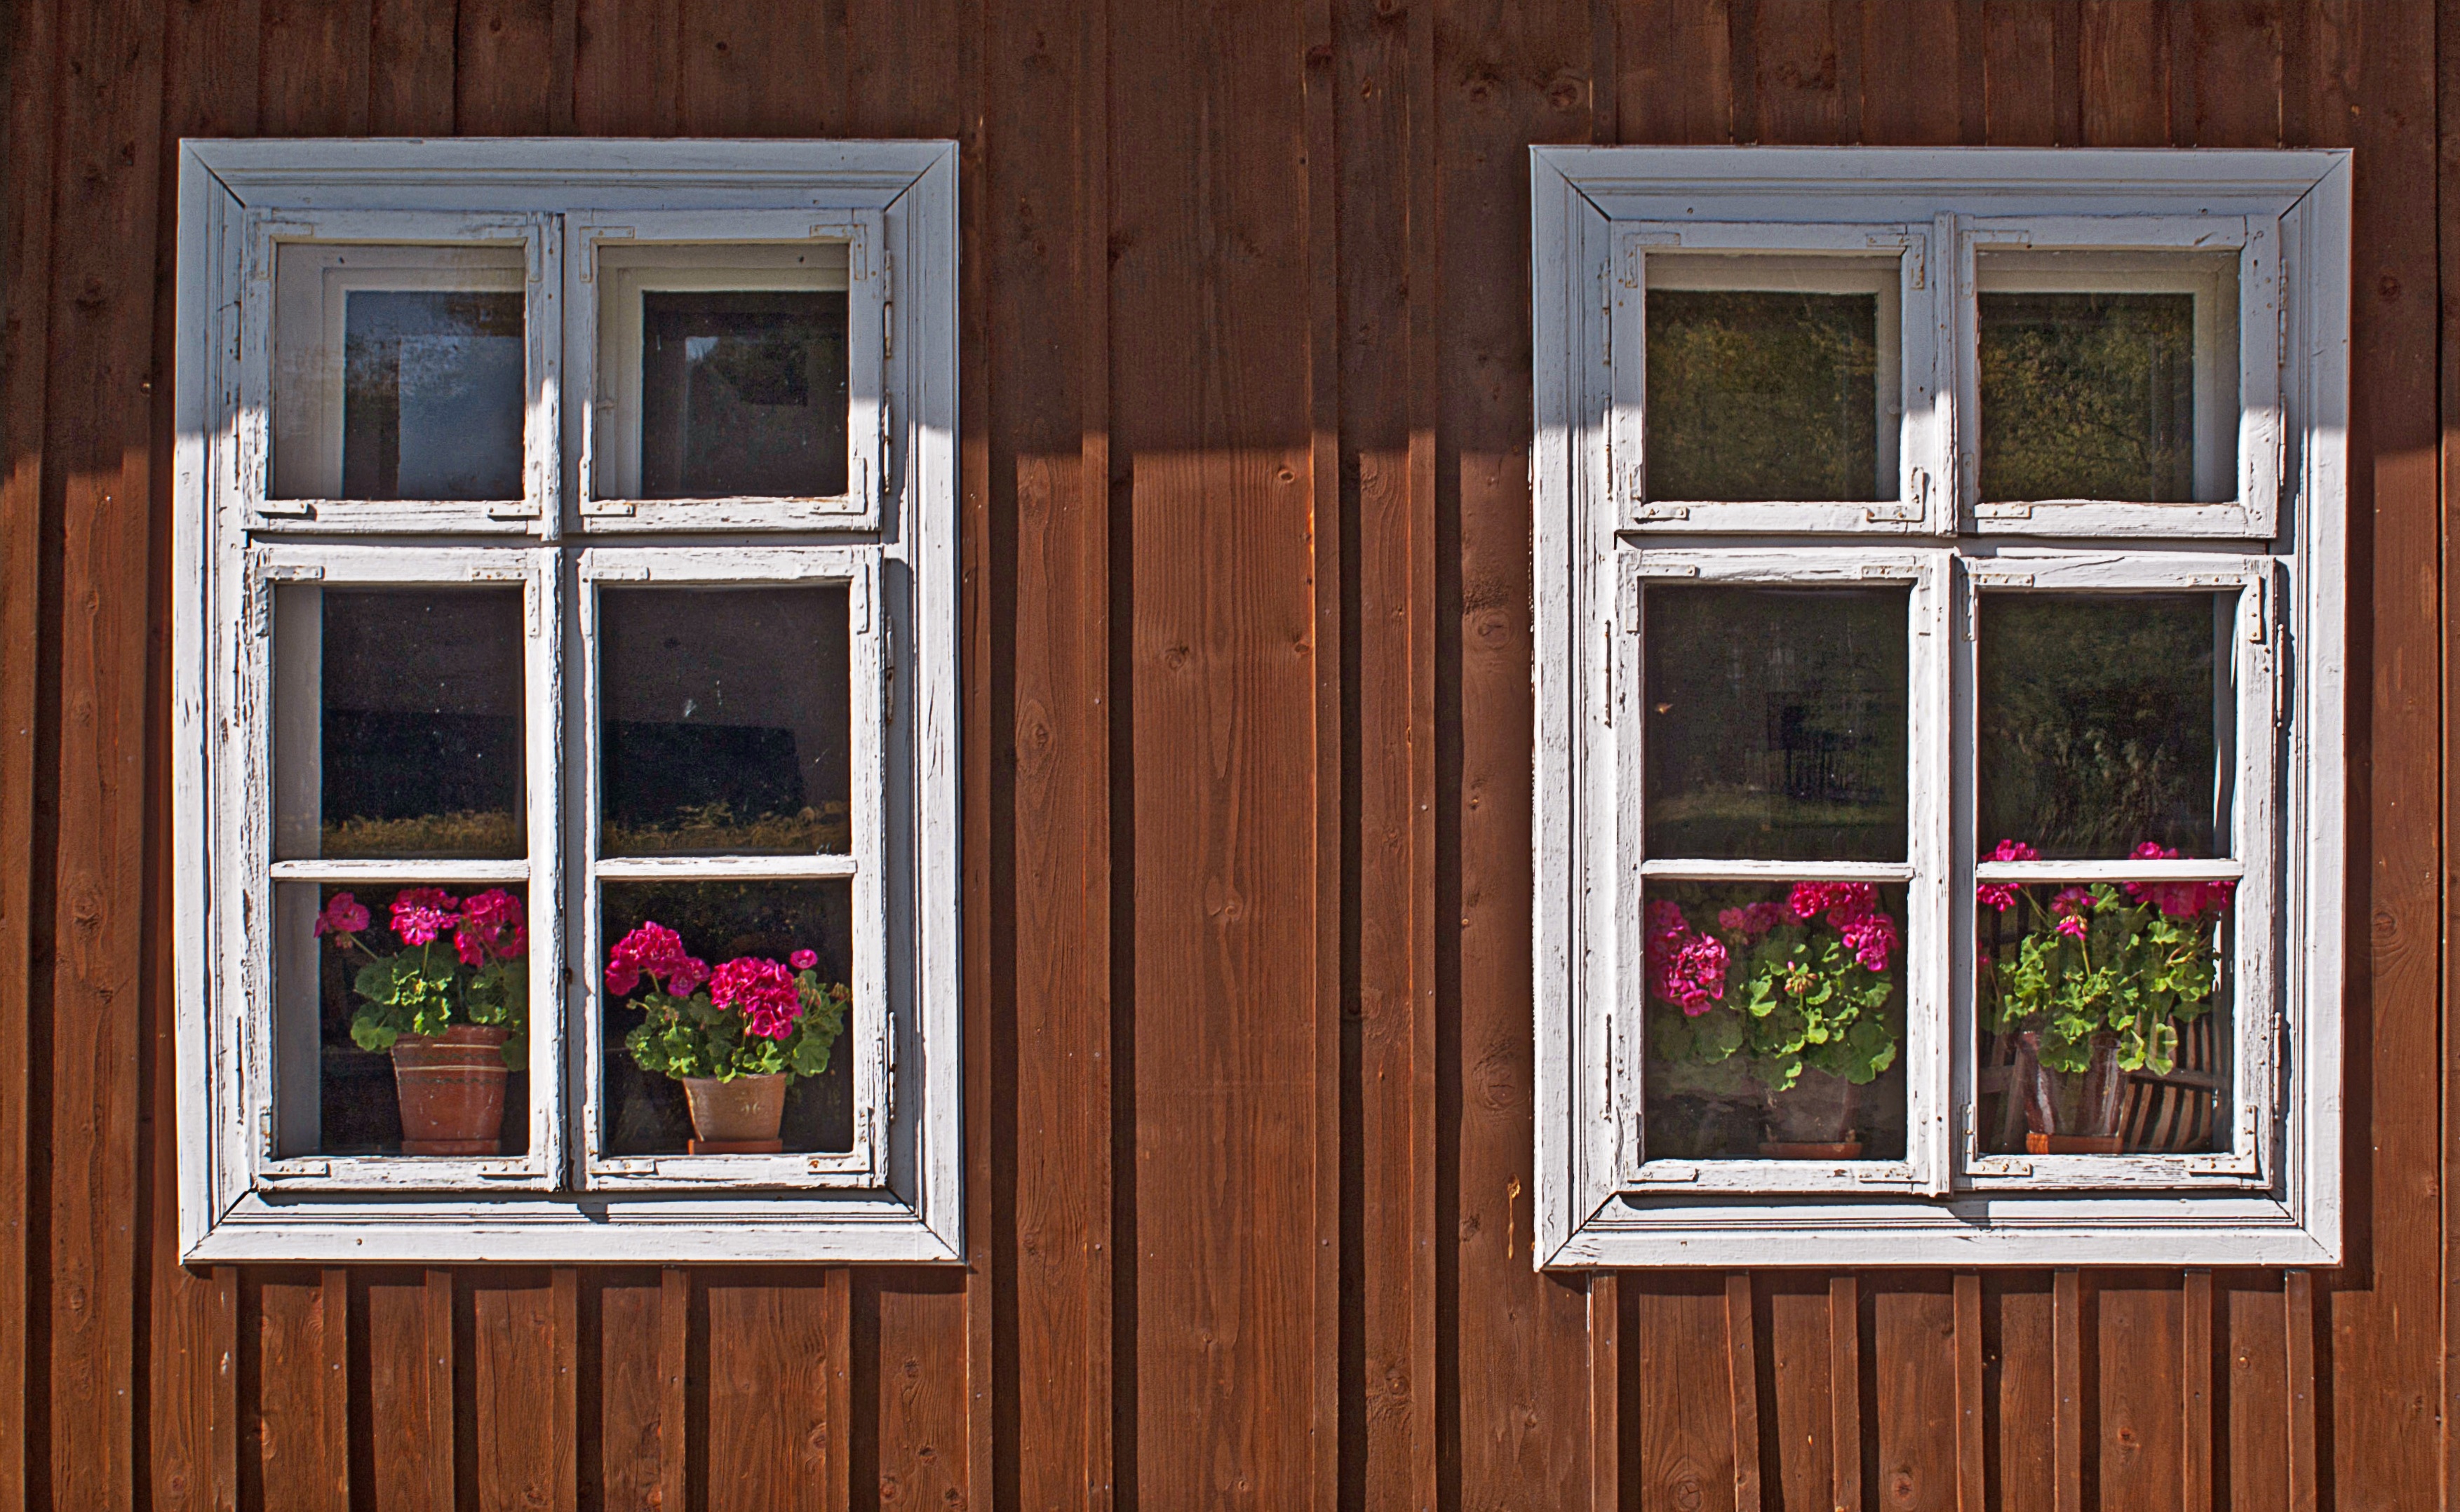 Window картинка. Старое окно. Окно снаружи дома. Окно вид с улицы. Красивое окно снаружи.